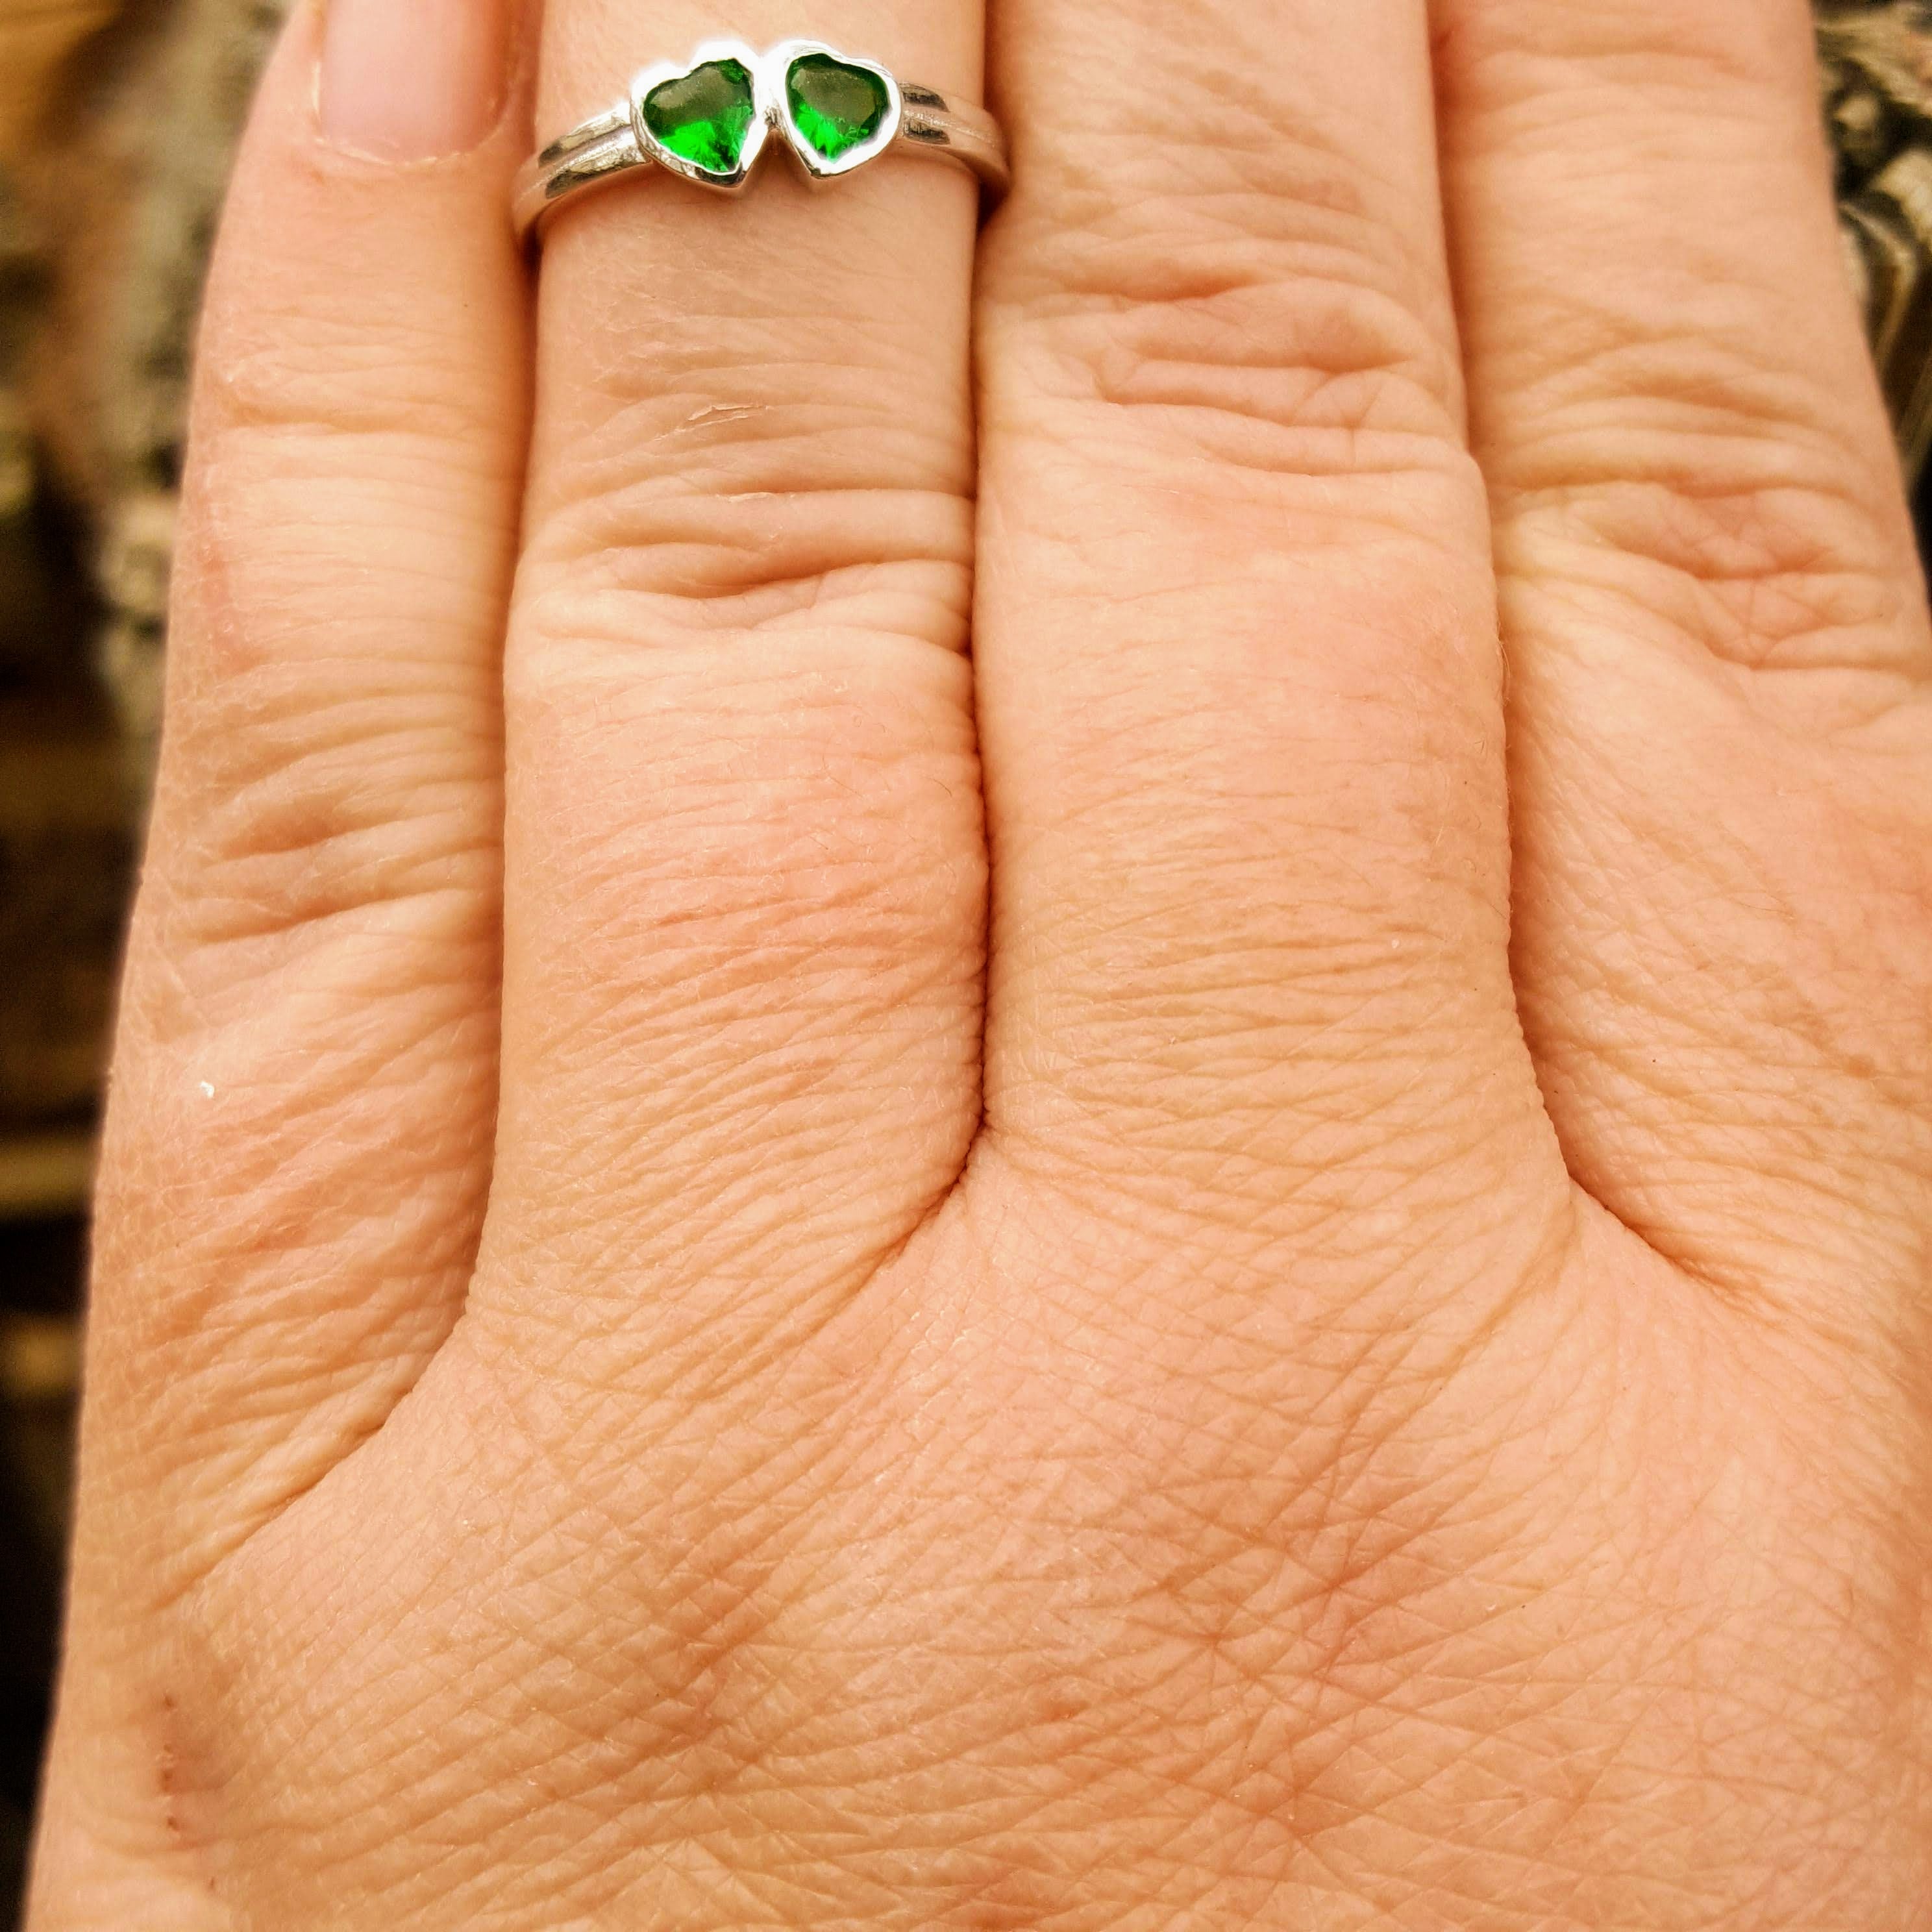 Green heart thumb ring